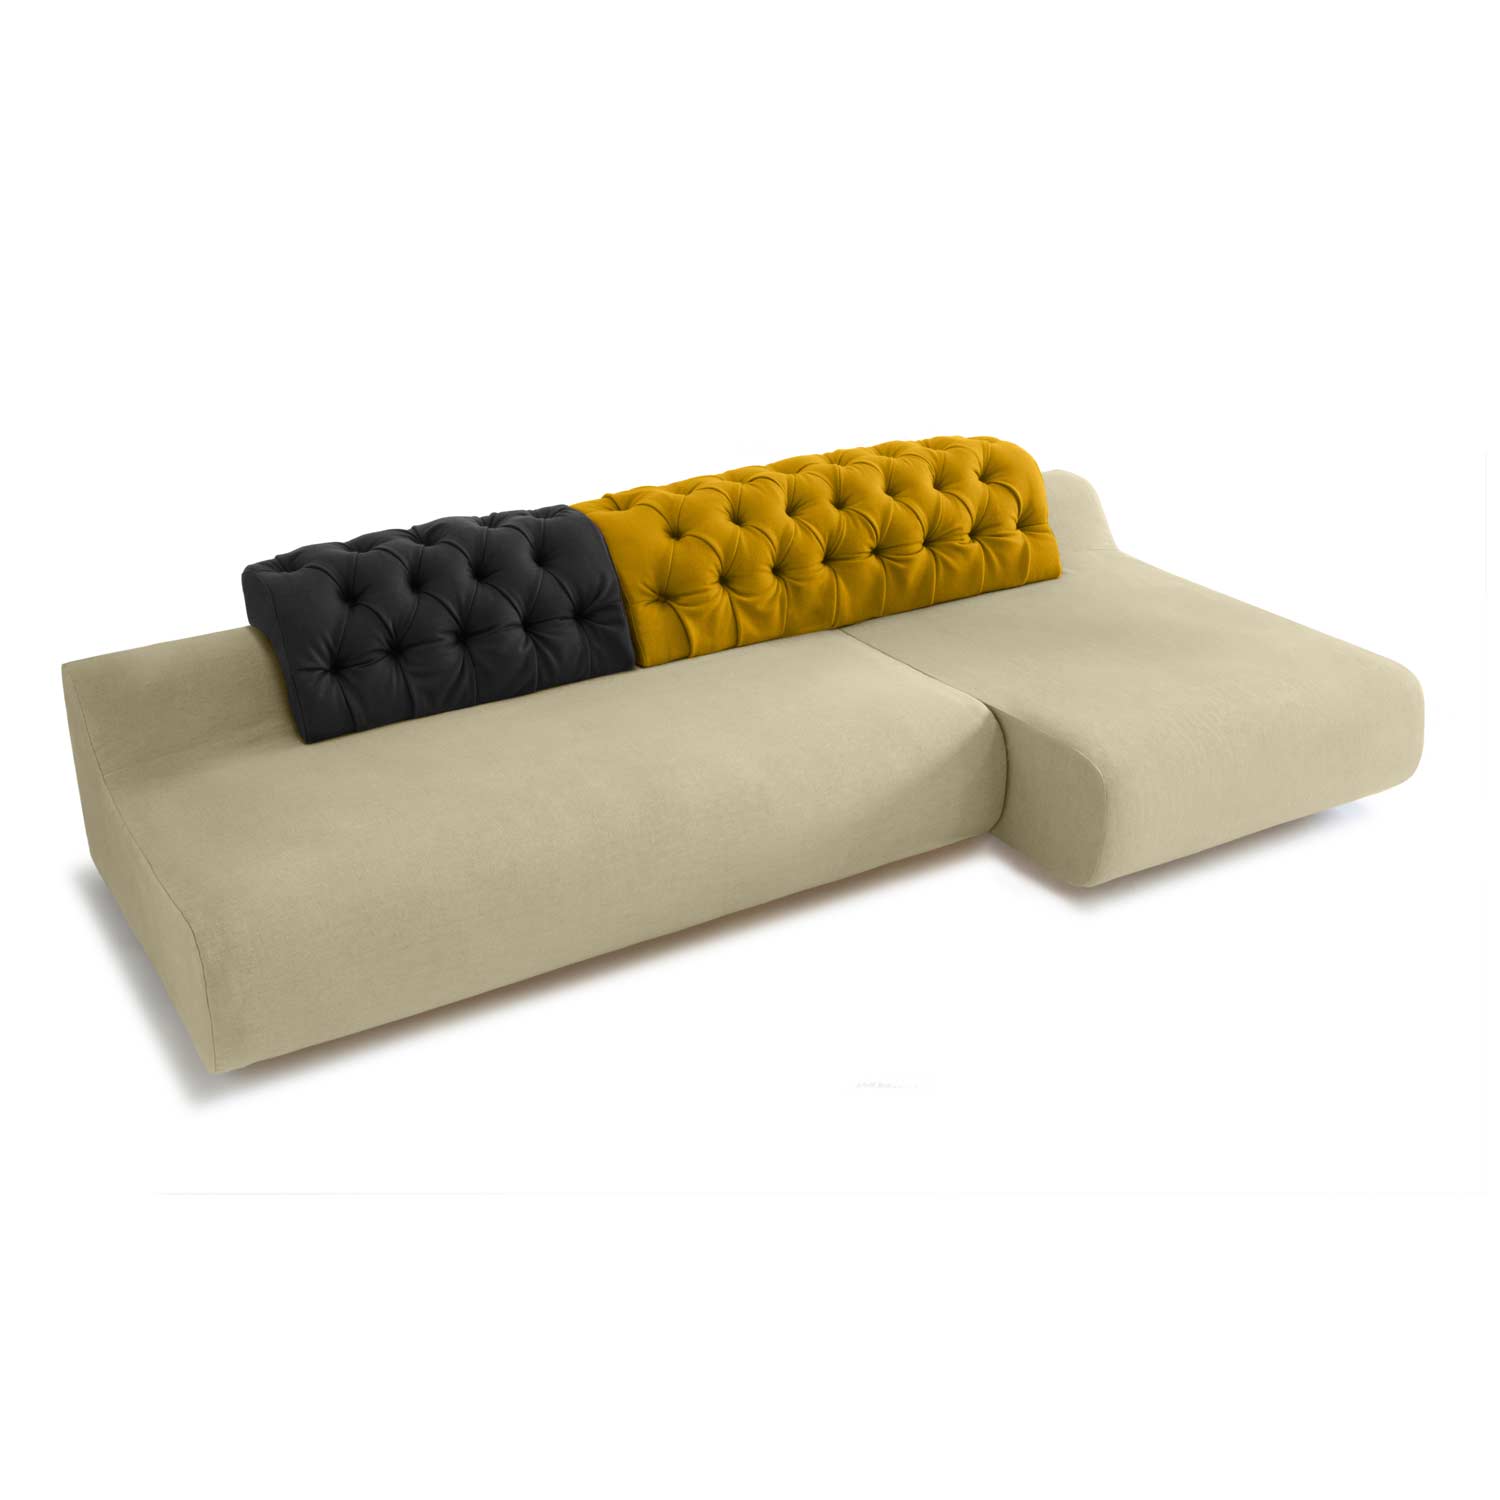 Movable Capitonné Style Backrest – Ultimate Comfort